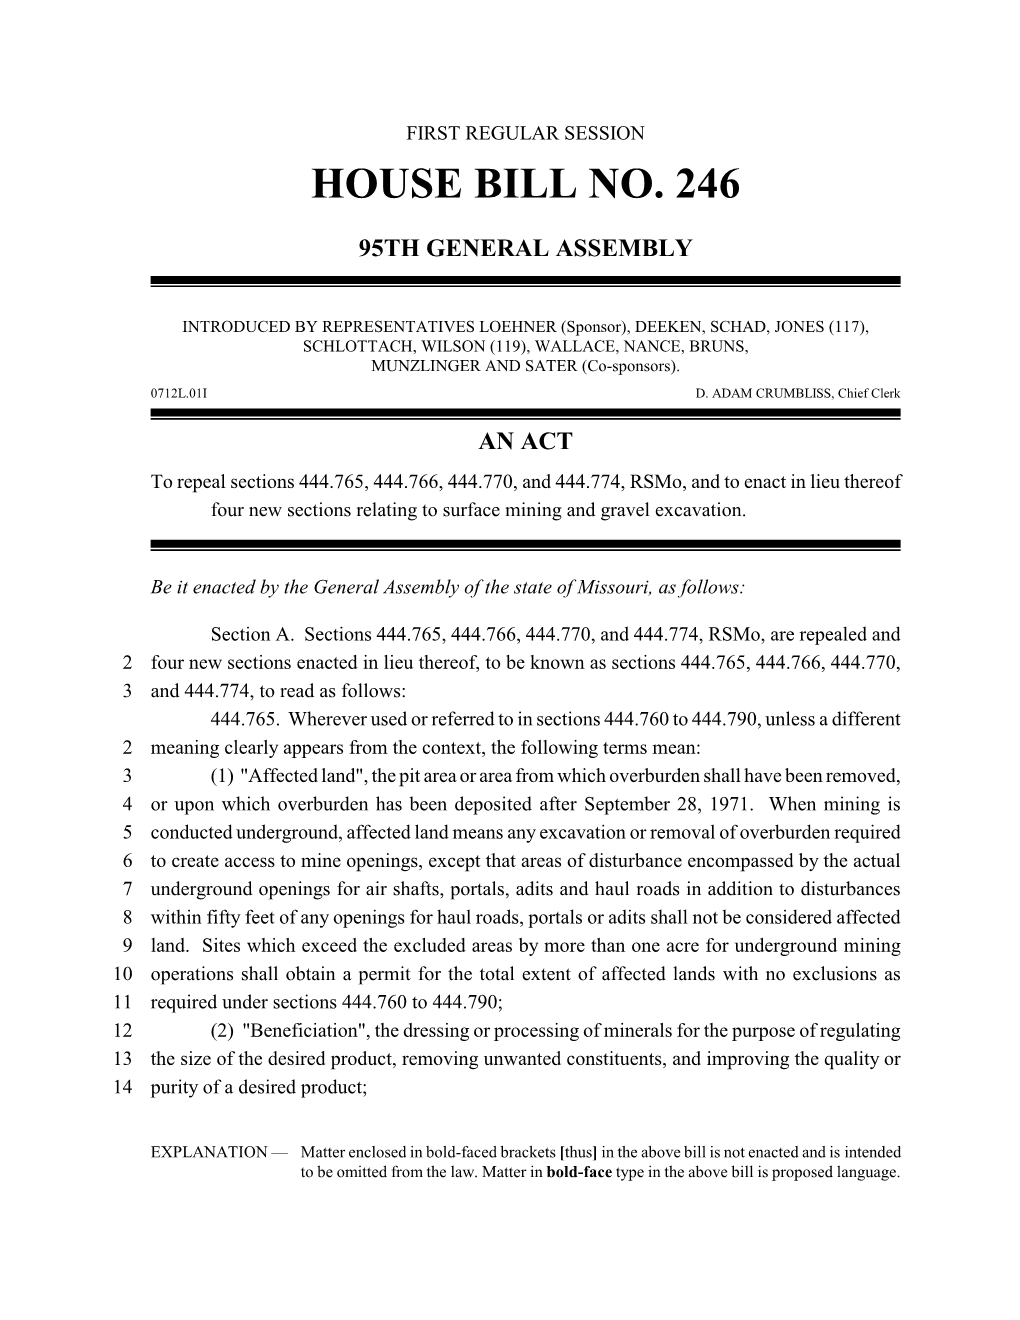 House Bill No. 246